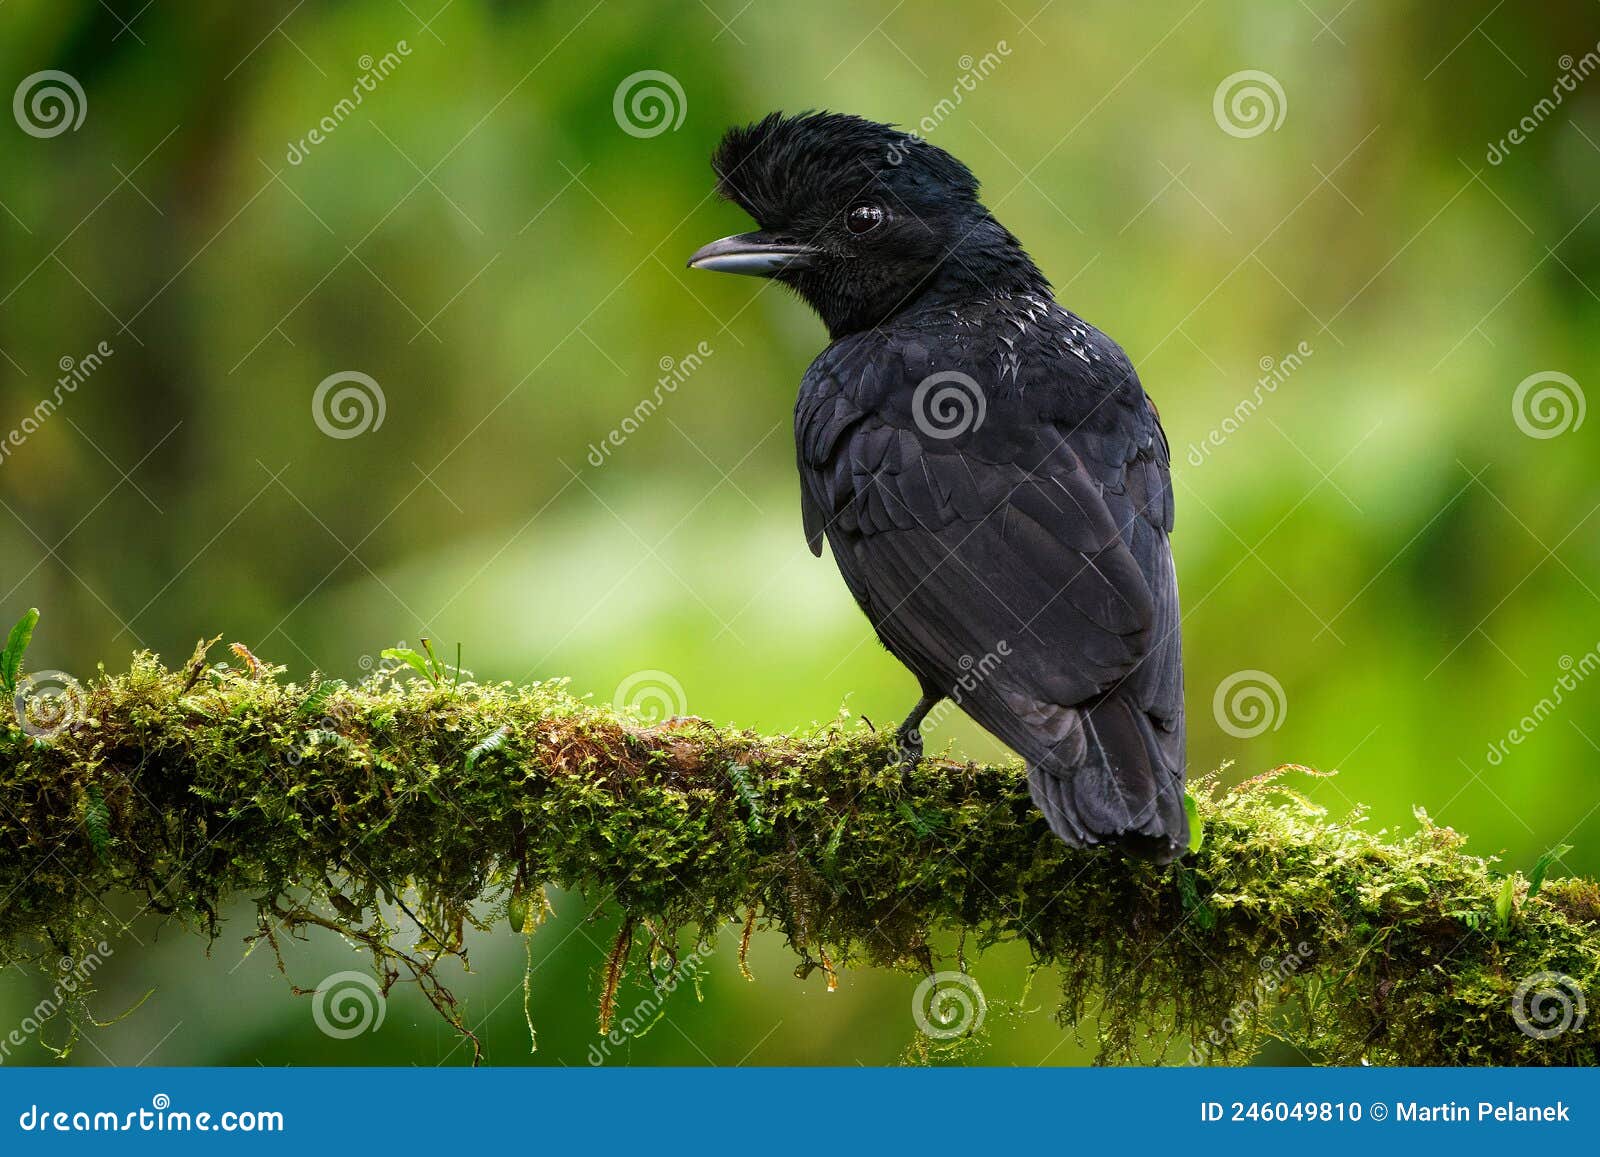 long-wattled umbrellabird - cephalopterus penduliger, cotingidae, spanish names include pajaro bolson, pajaro toro, dungali and